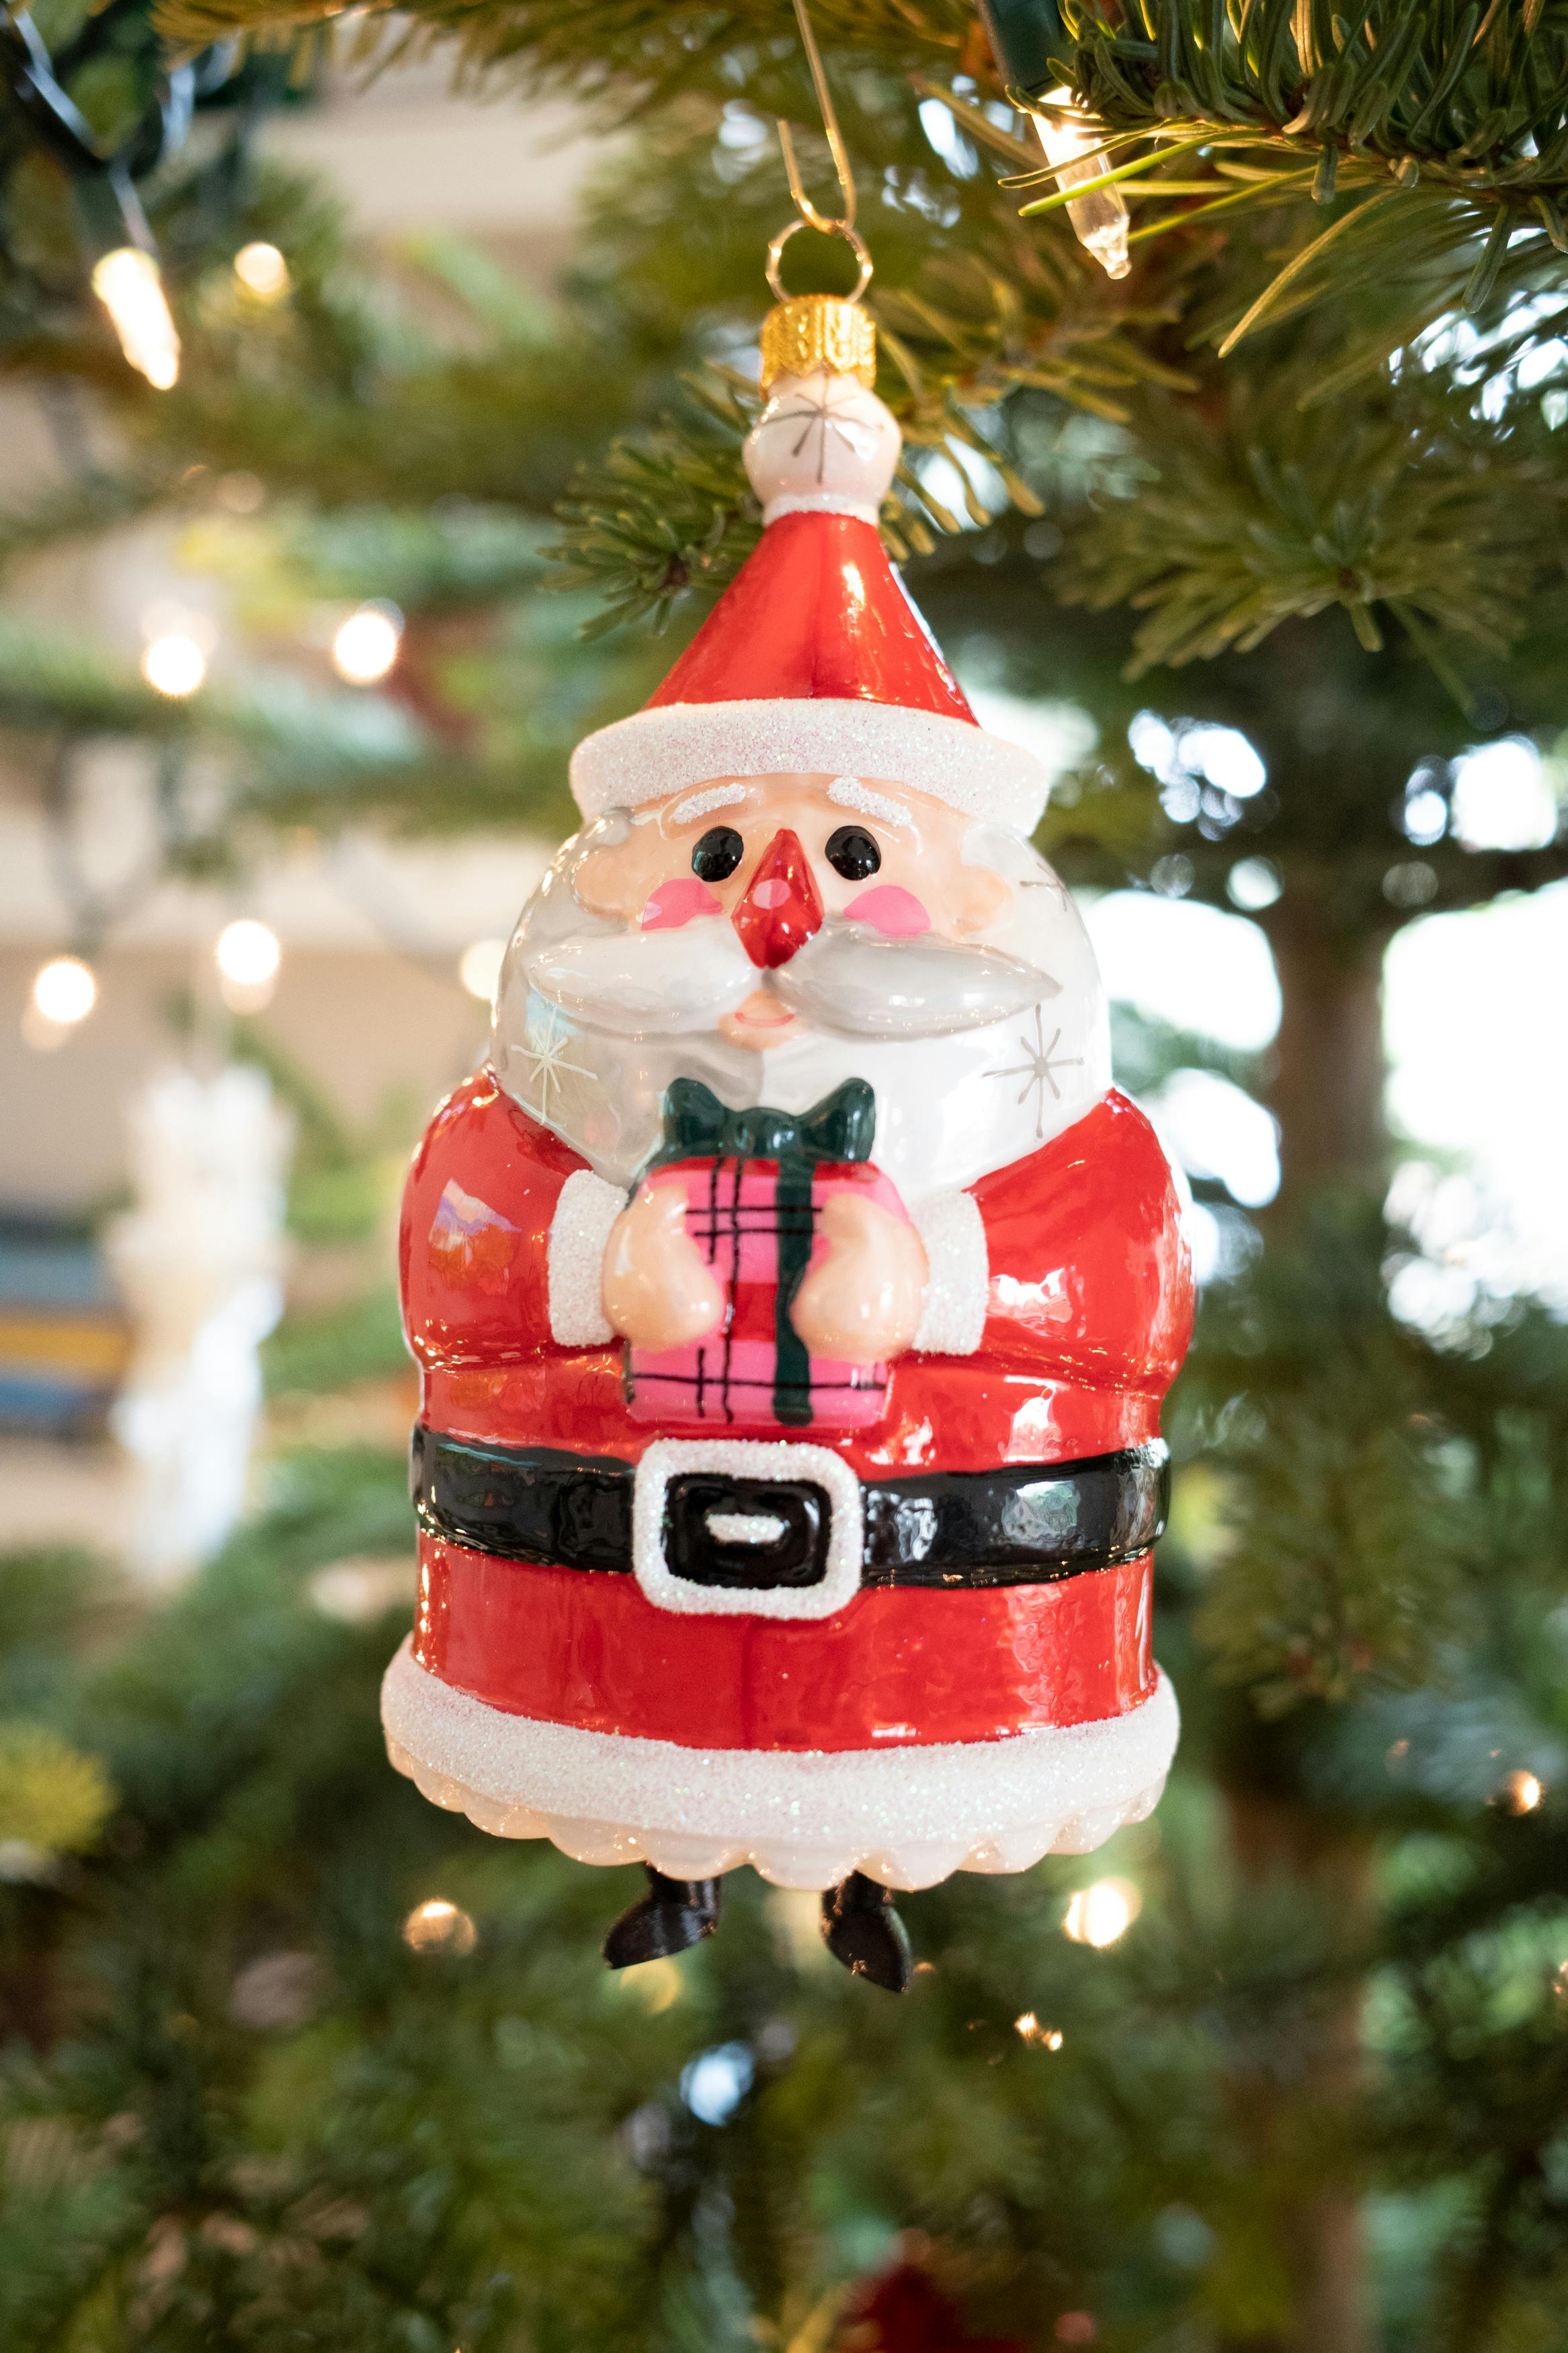 Exclusive 2022 Santa.com Ornament on tree